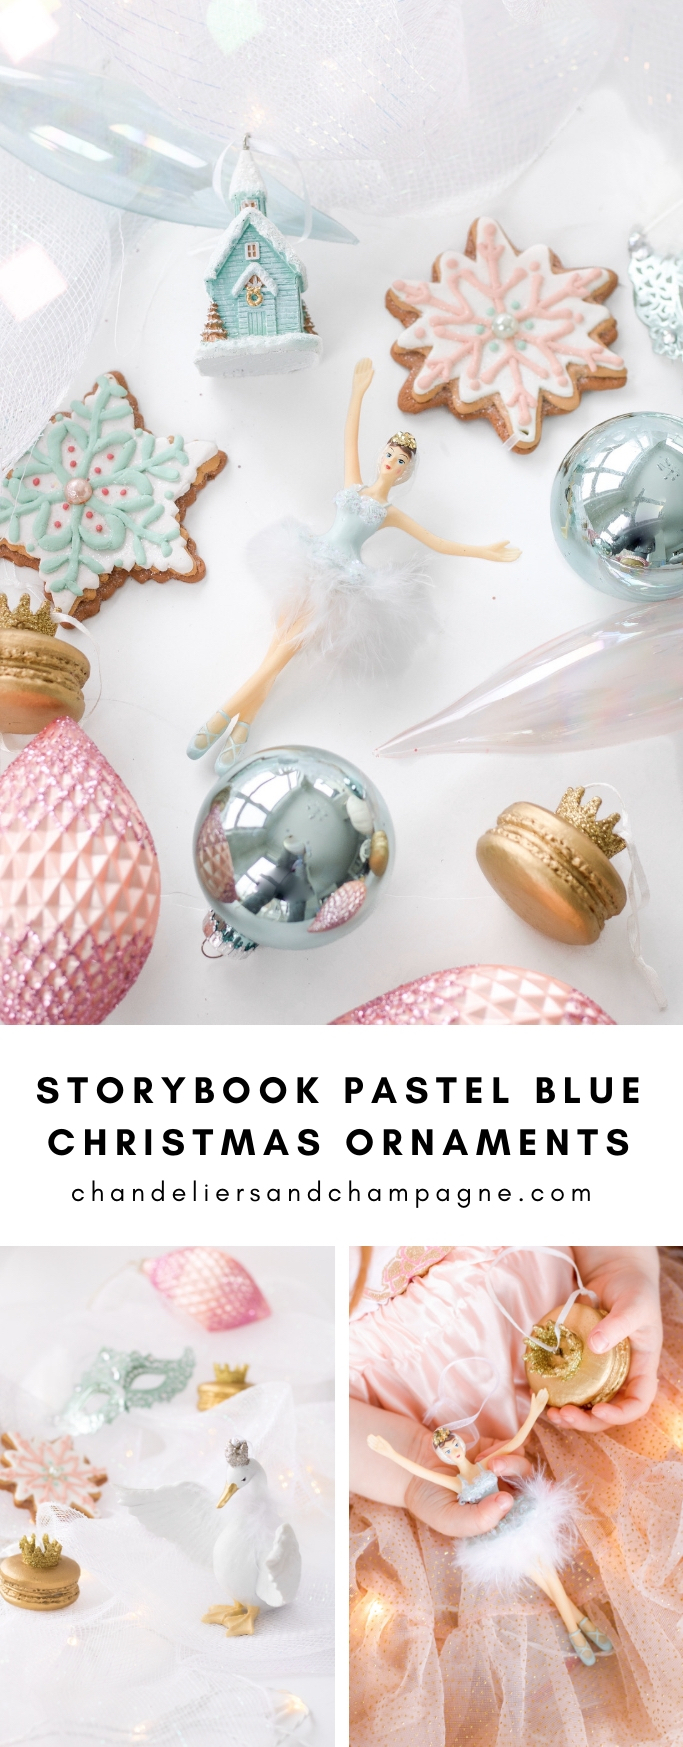 Storybook Pastel Blue Christmas Ornaments